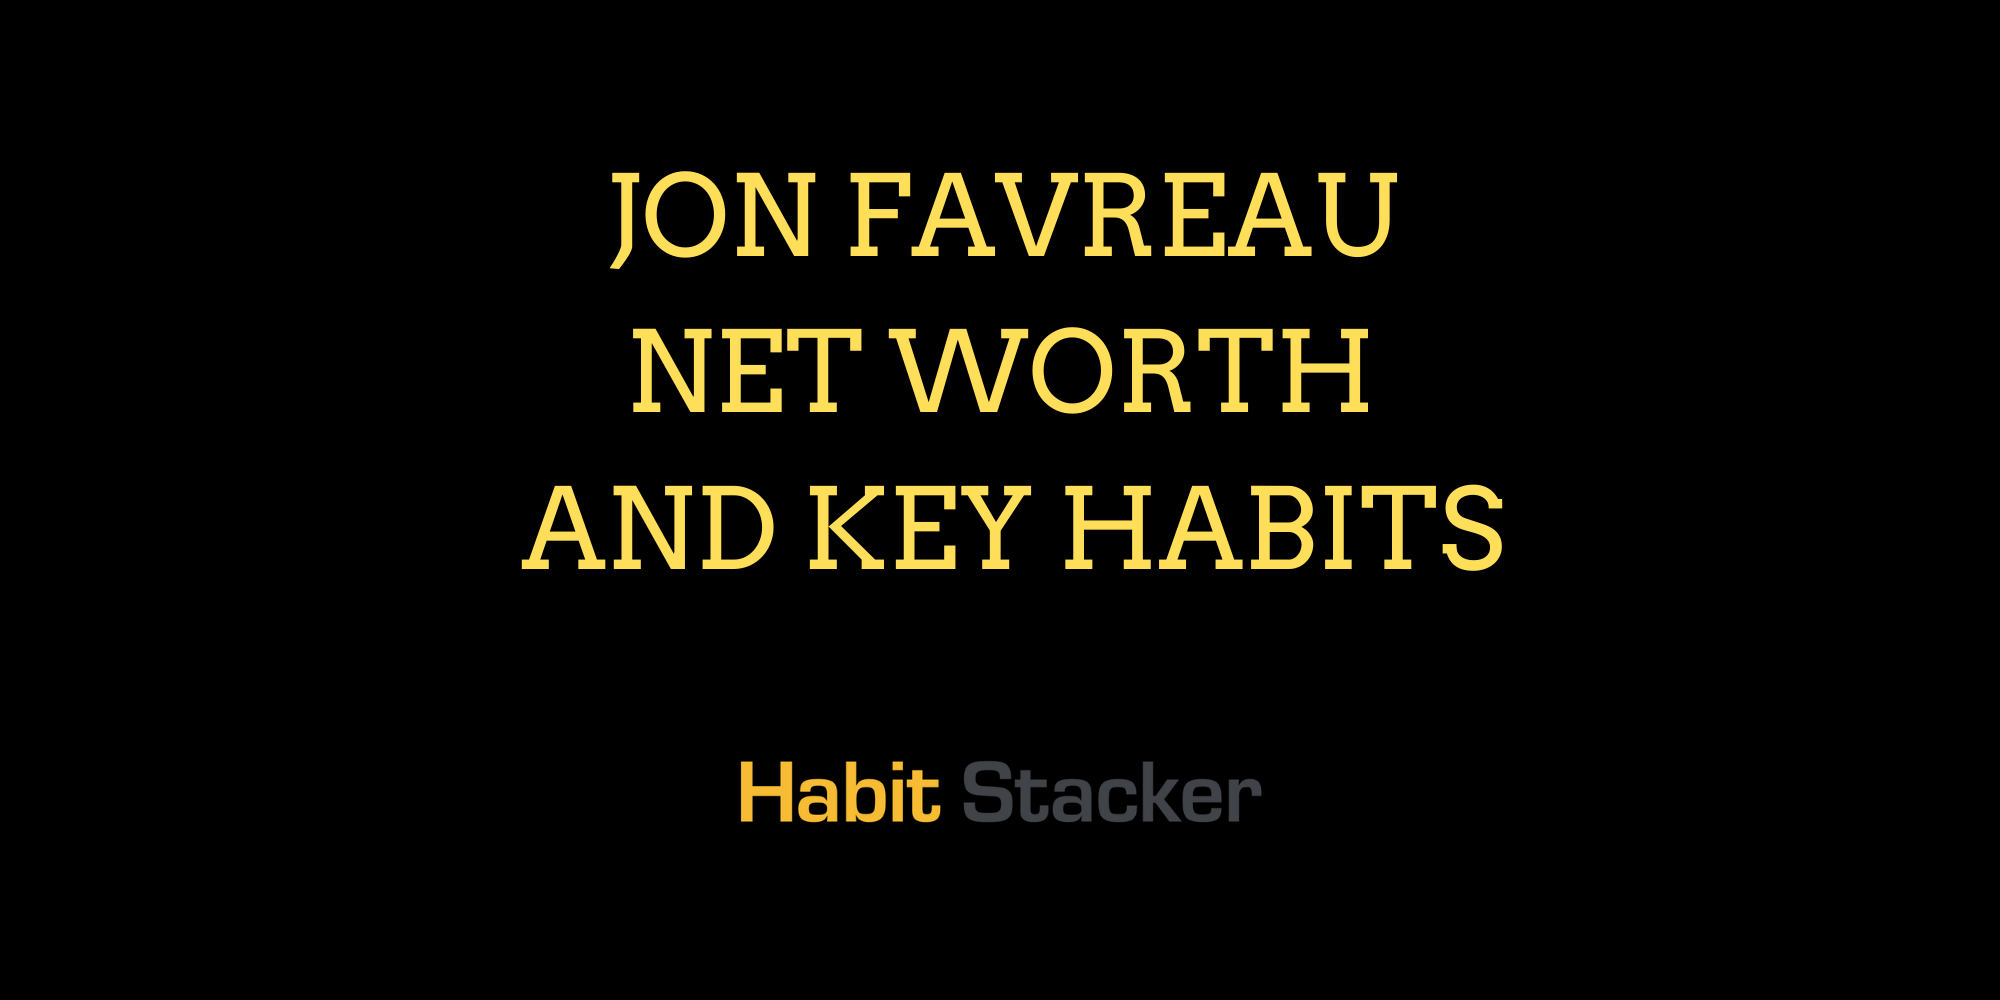 Jon Favreau Net Worth and Key Habits